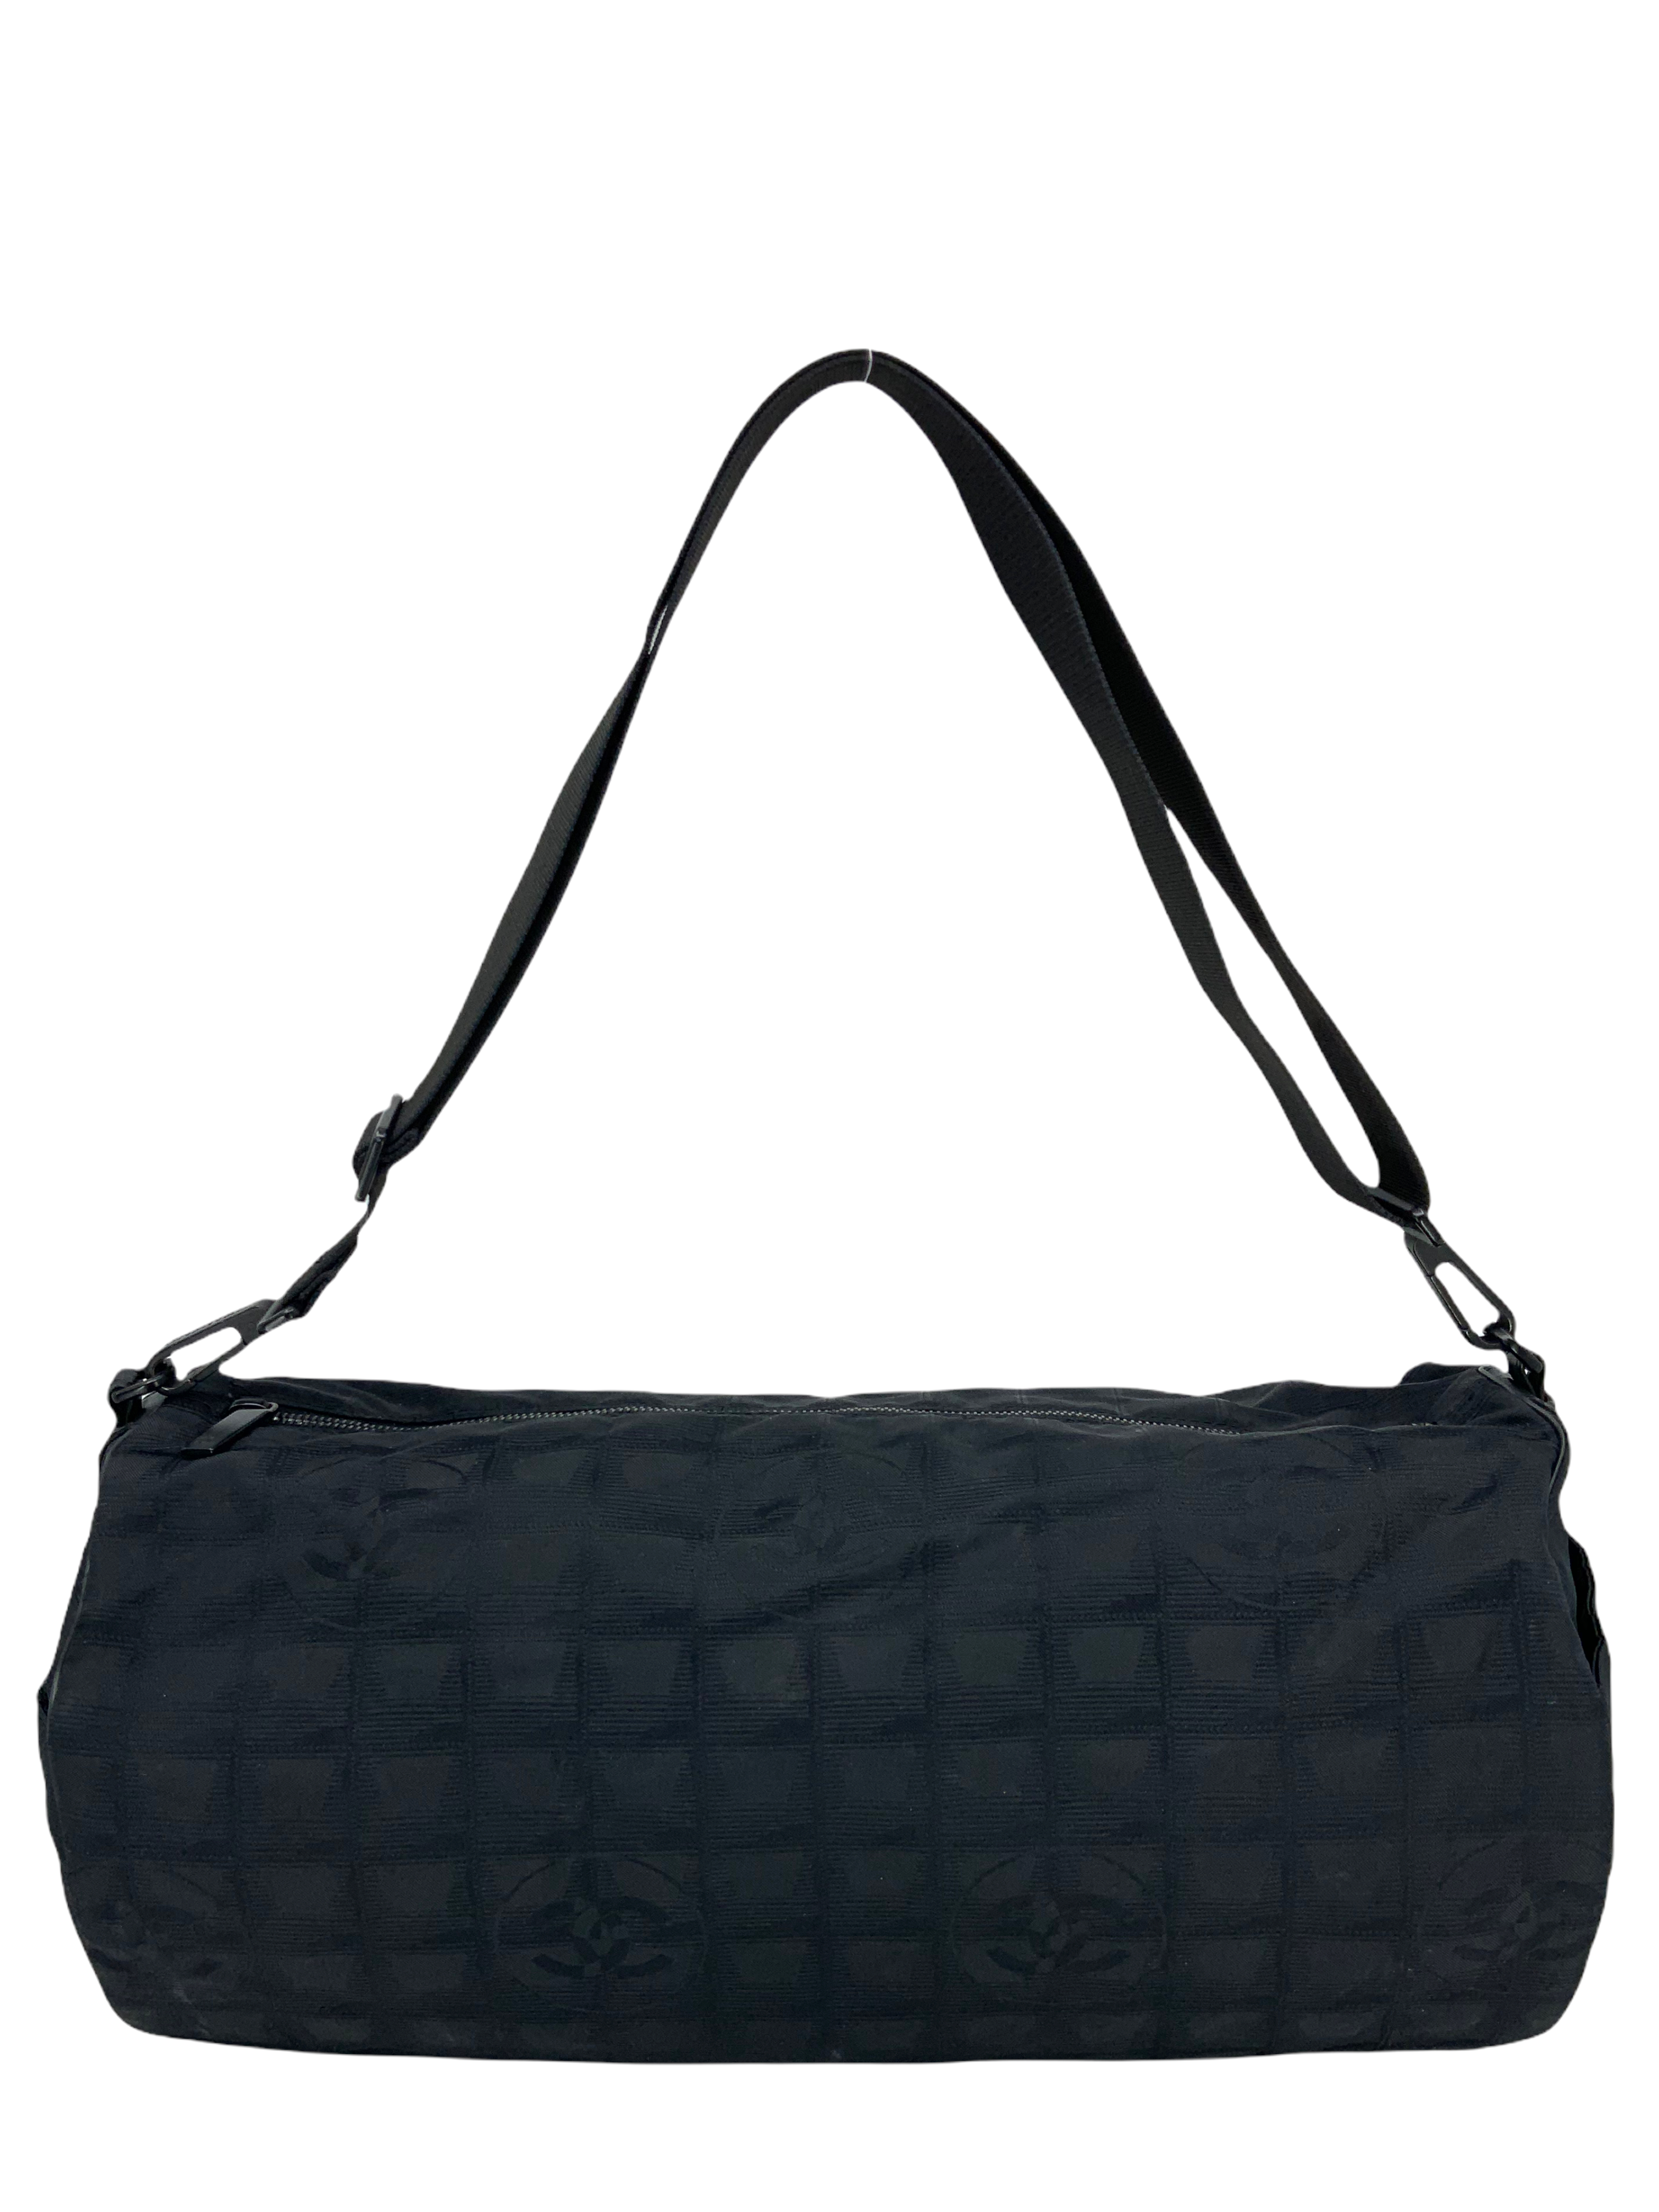 Authentic Nylon Chanel Travel Bag in Black